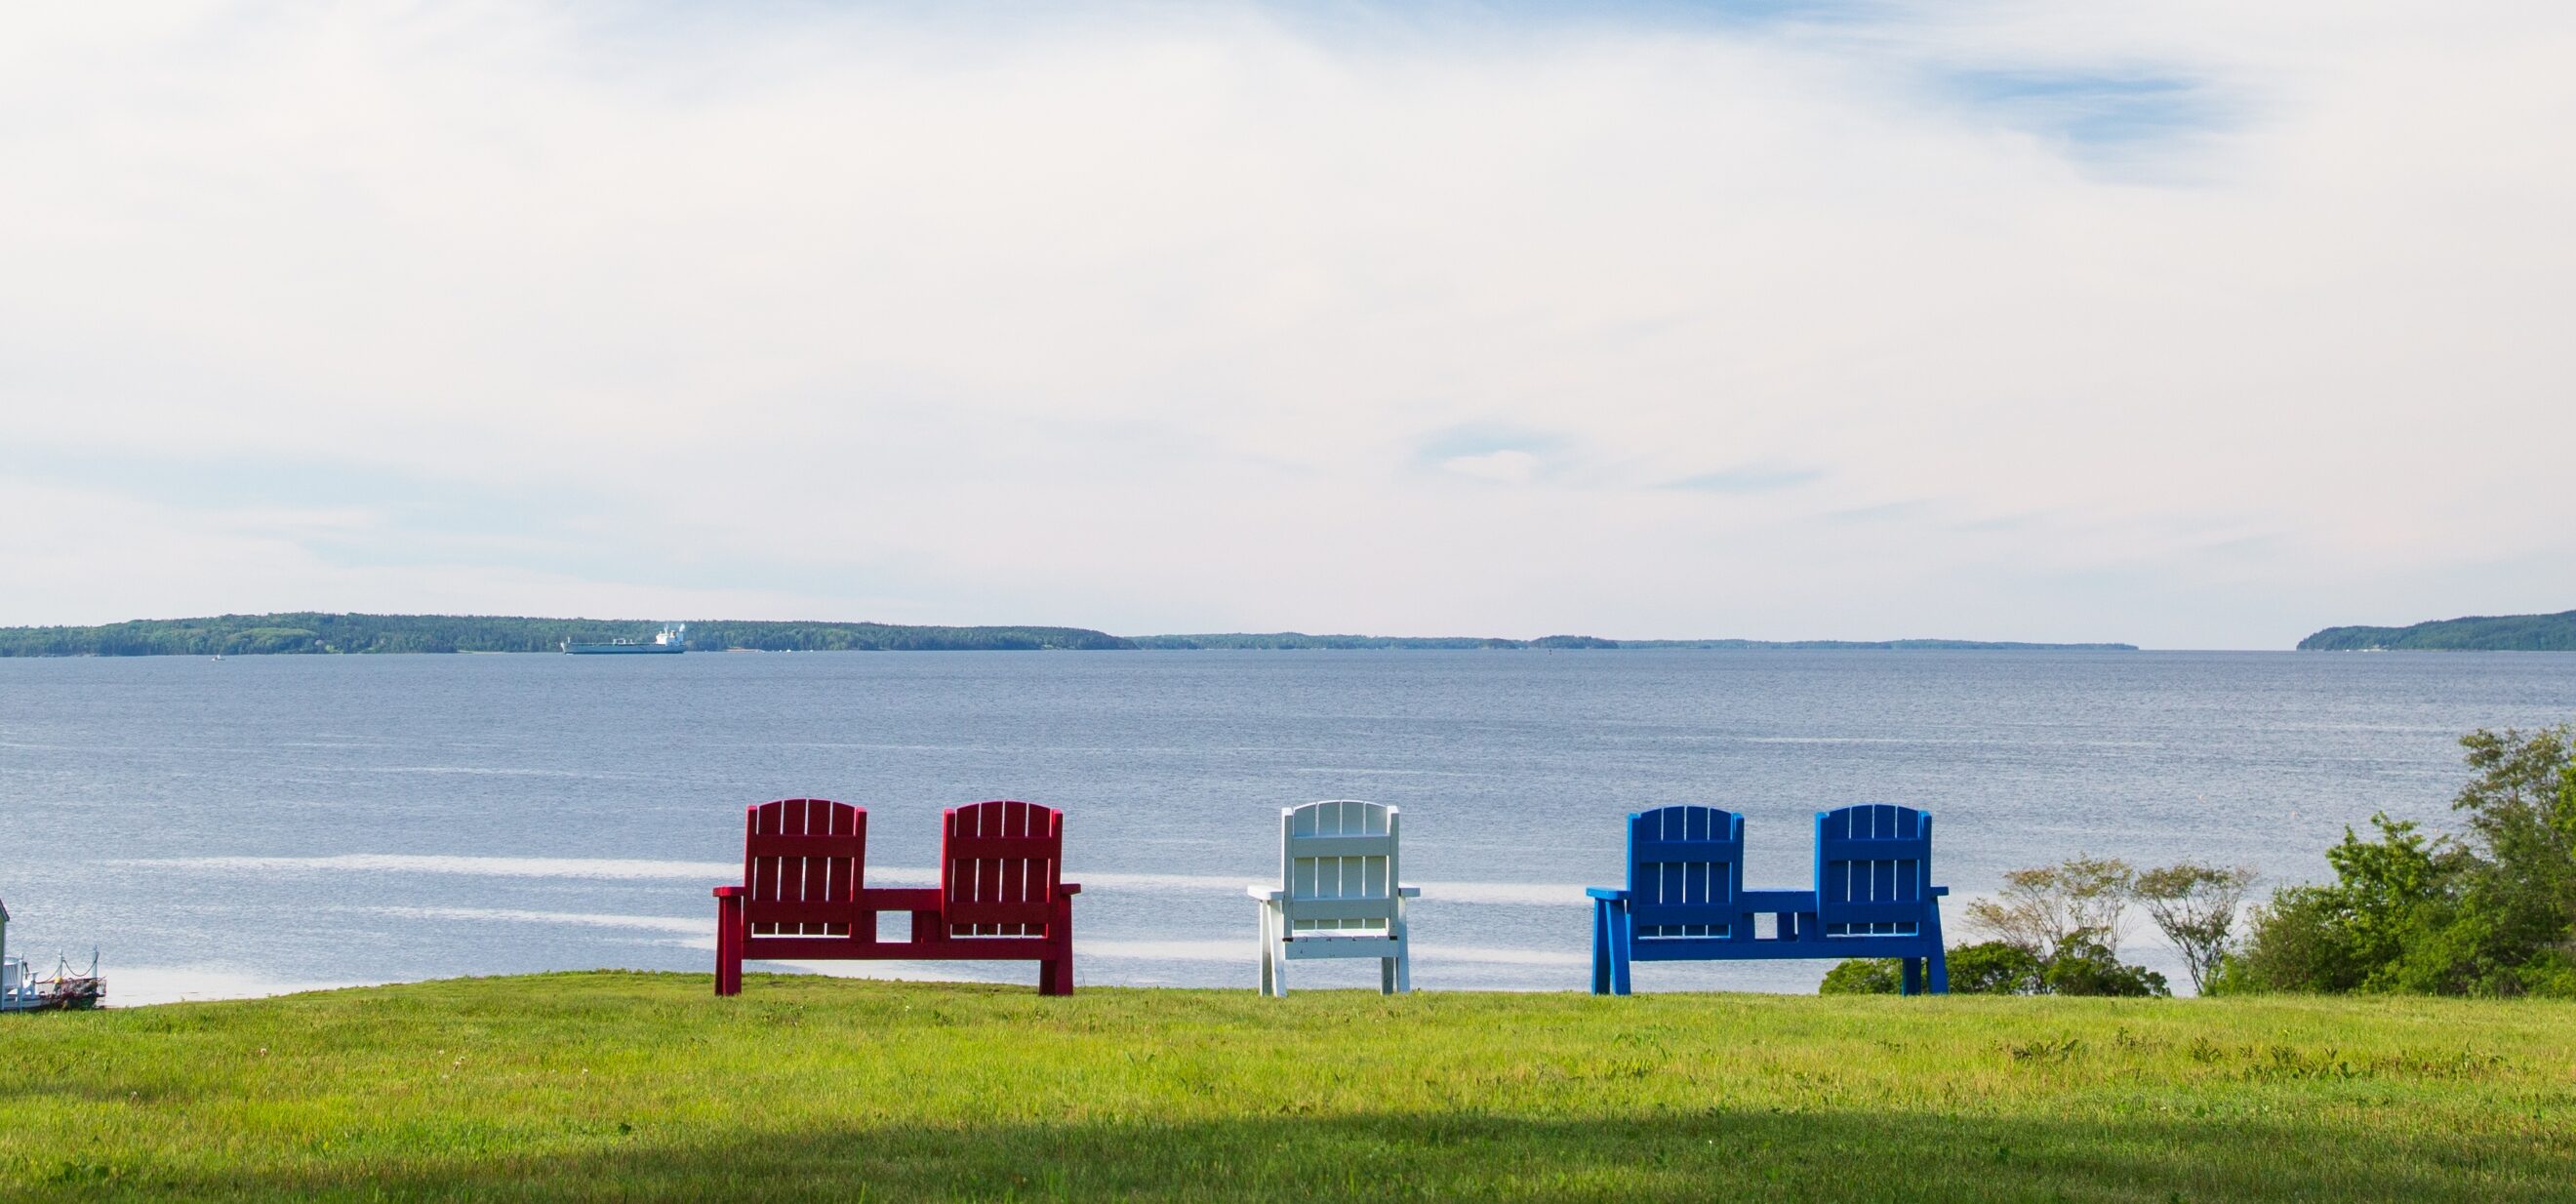 Water views with Adirondack chairs